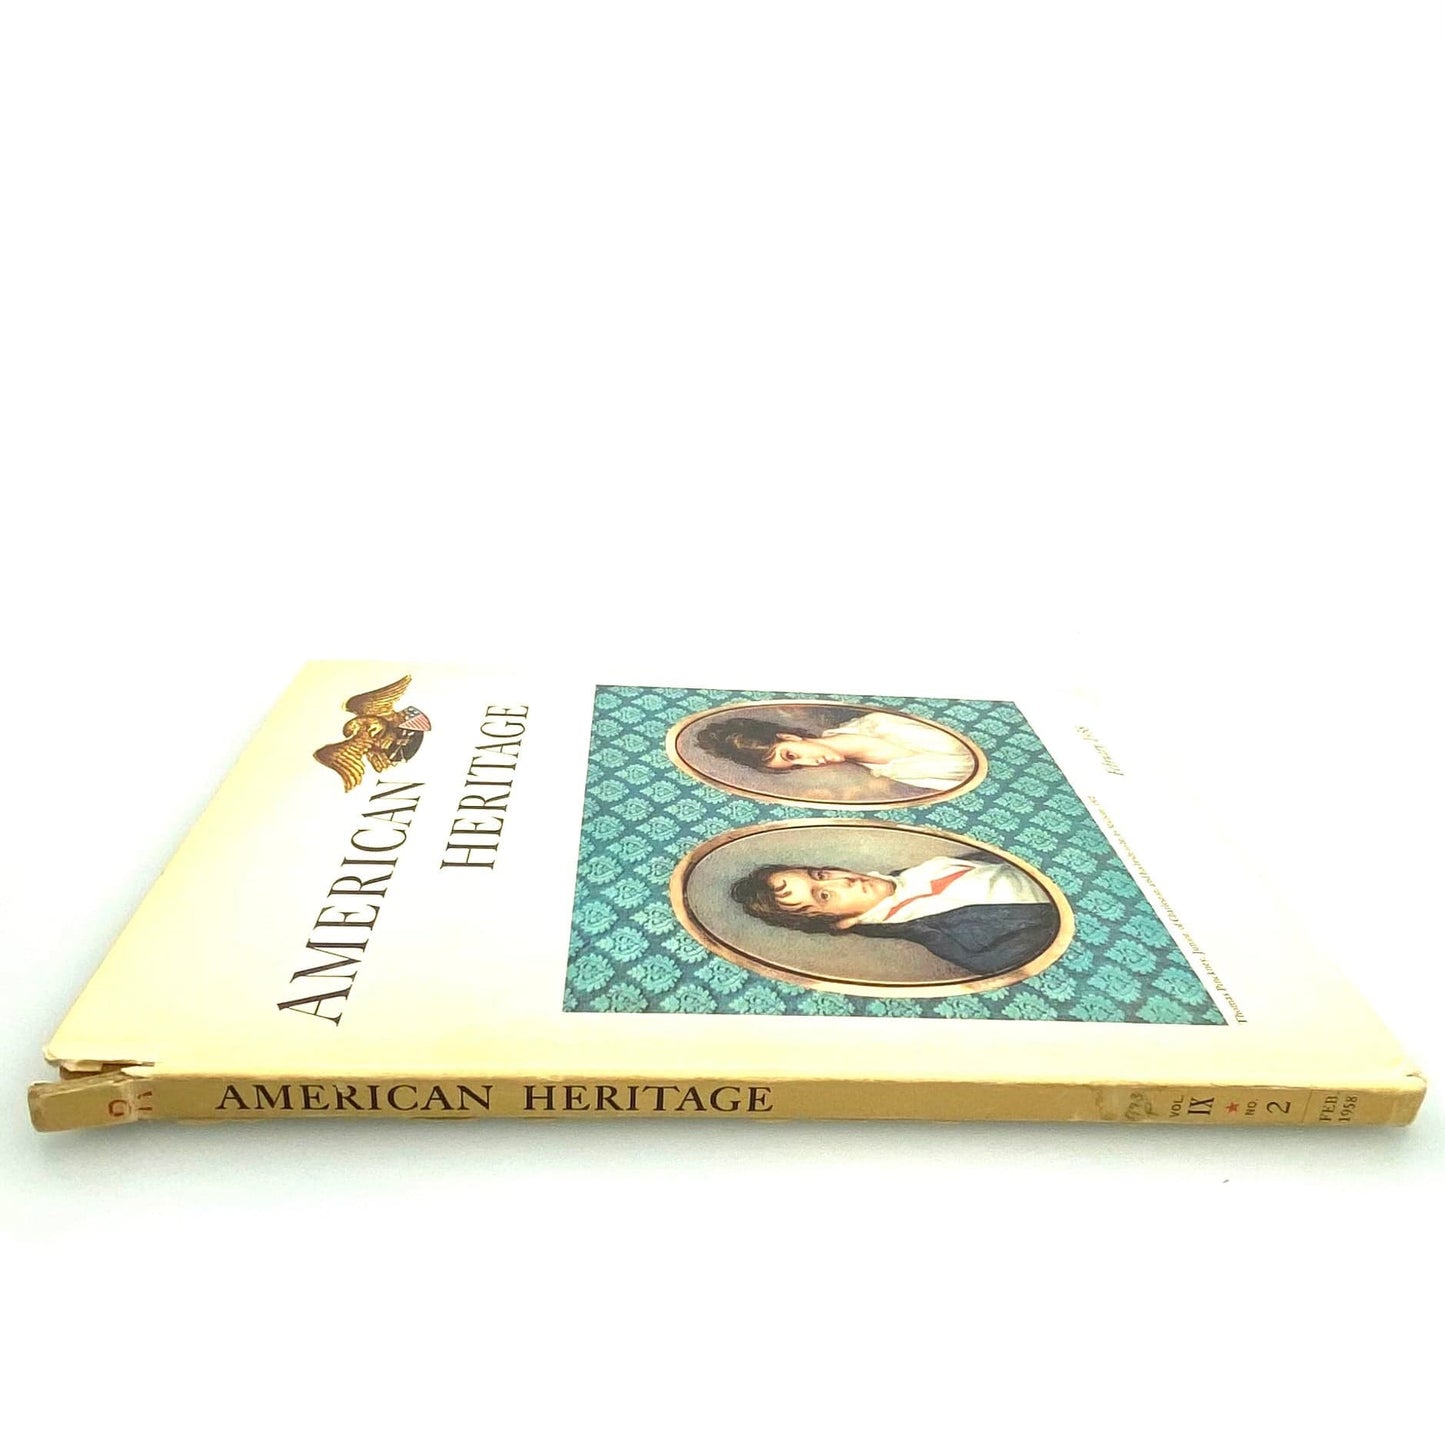 Vintage American Heritage Volume IX No 2 February 1958 Hardcover History Book